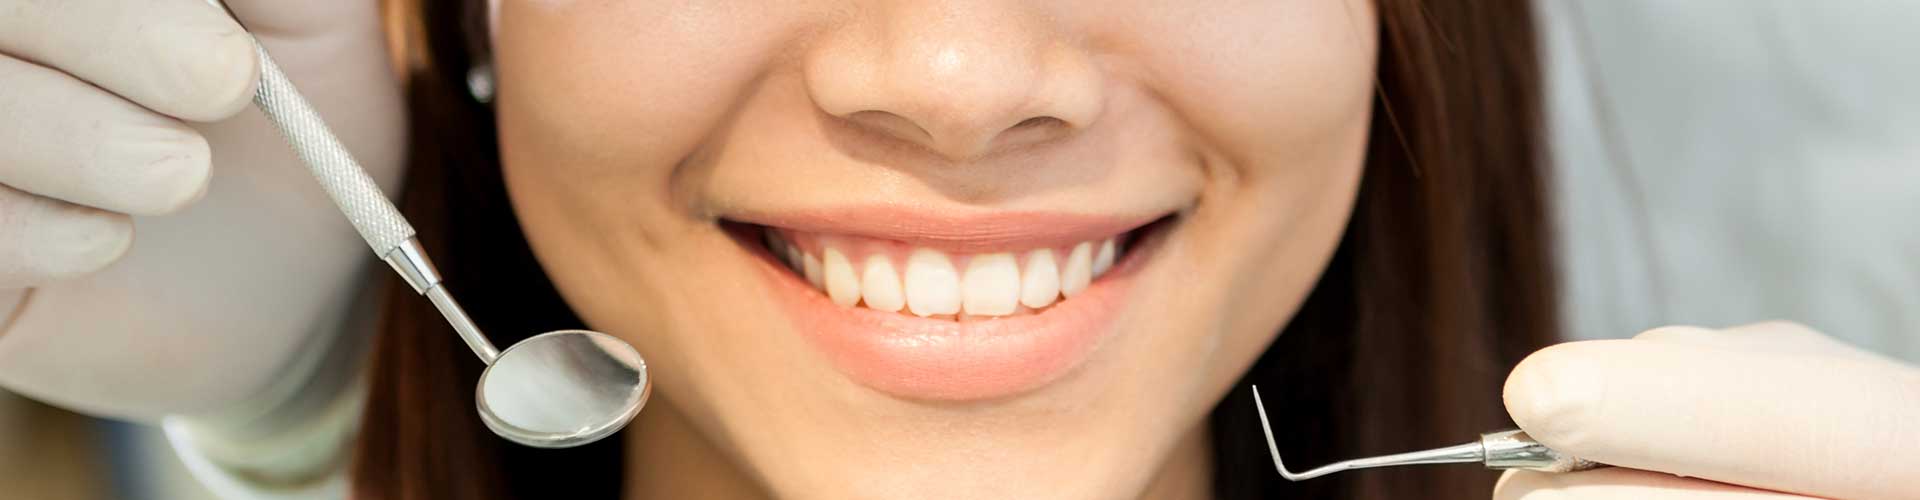 Teeth Cleaning | Tooth Suite Family Dentistry | General Dentist | Lloydminster